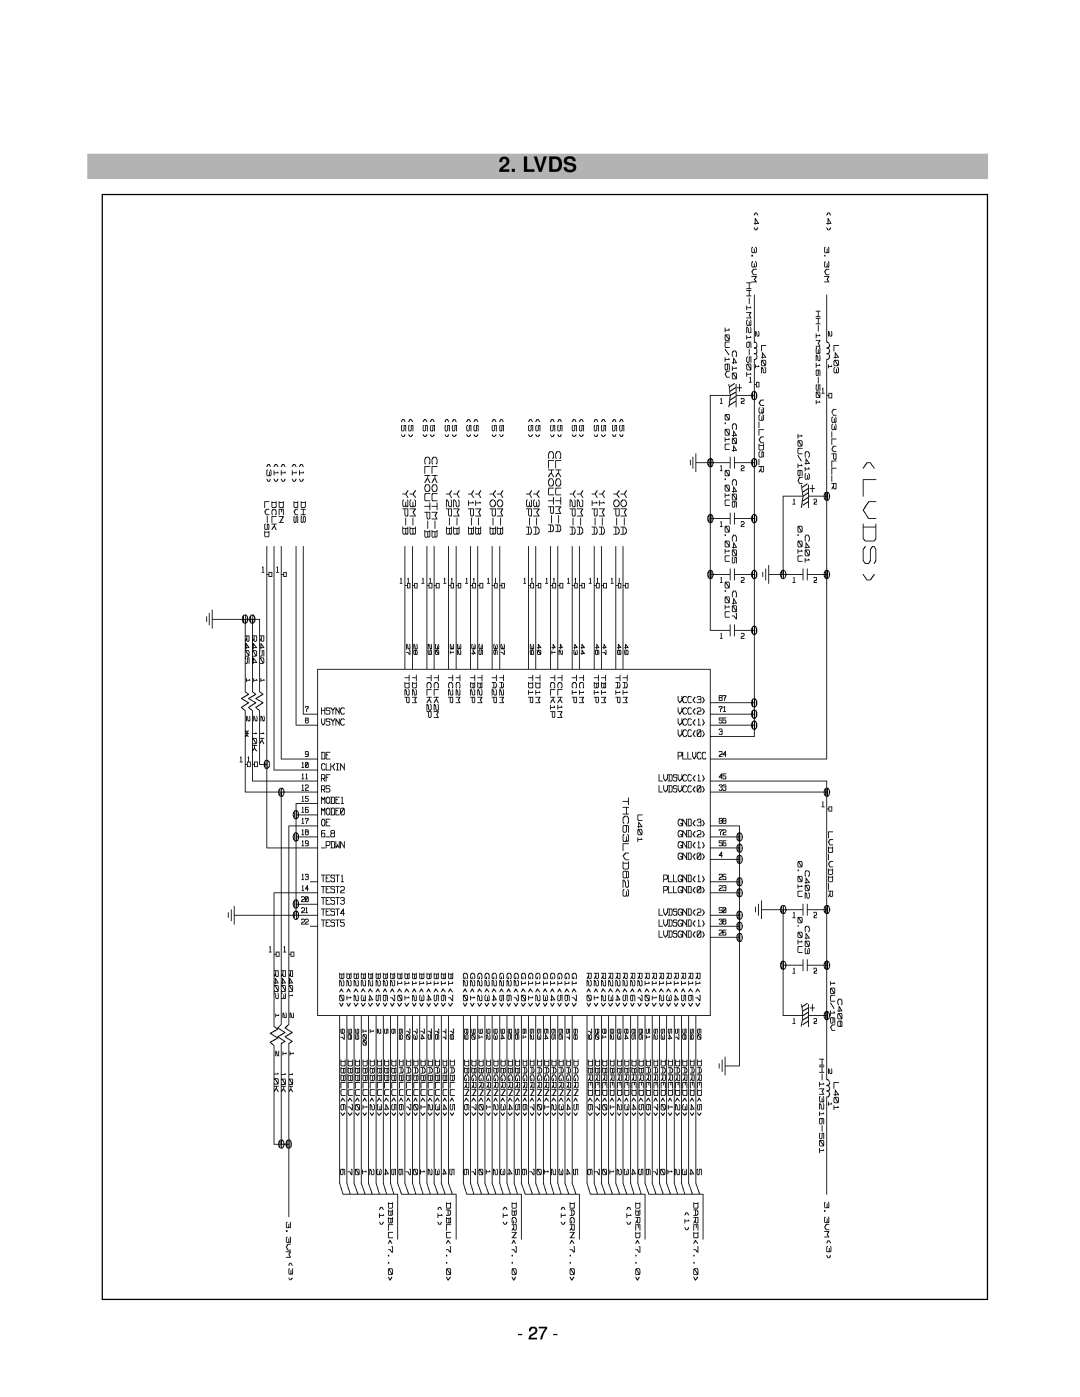 LG Electronics LCD 782LS service manual Lvds 